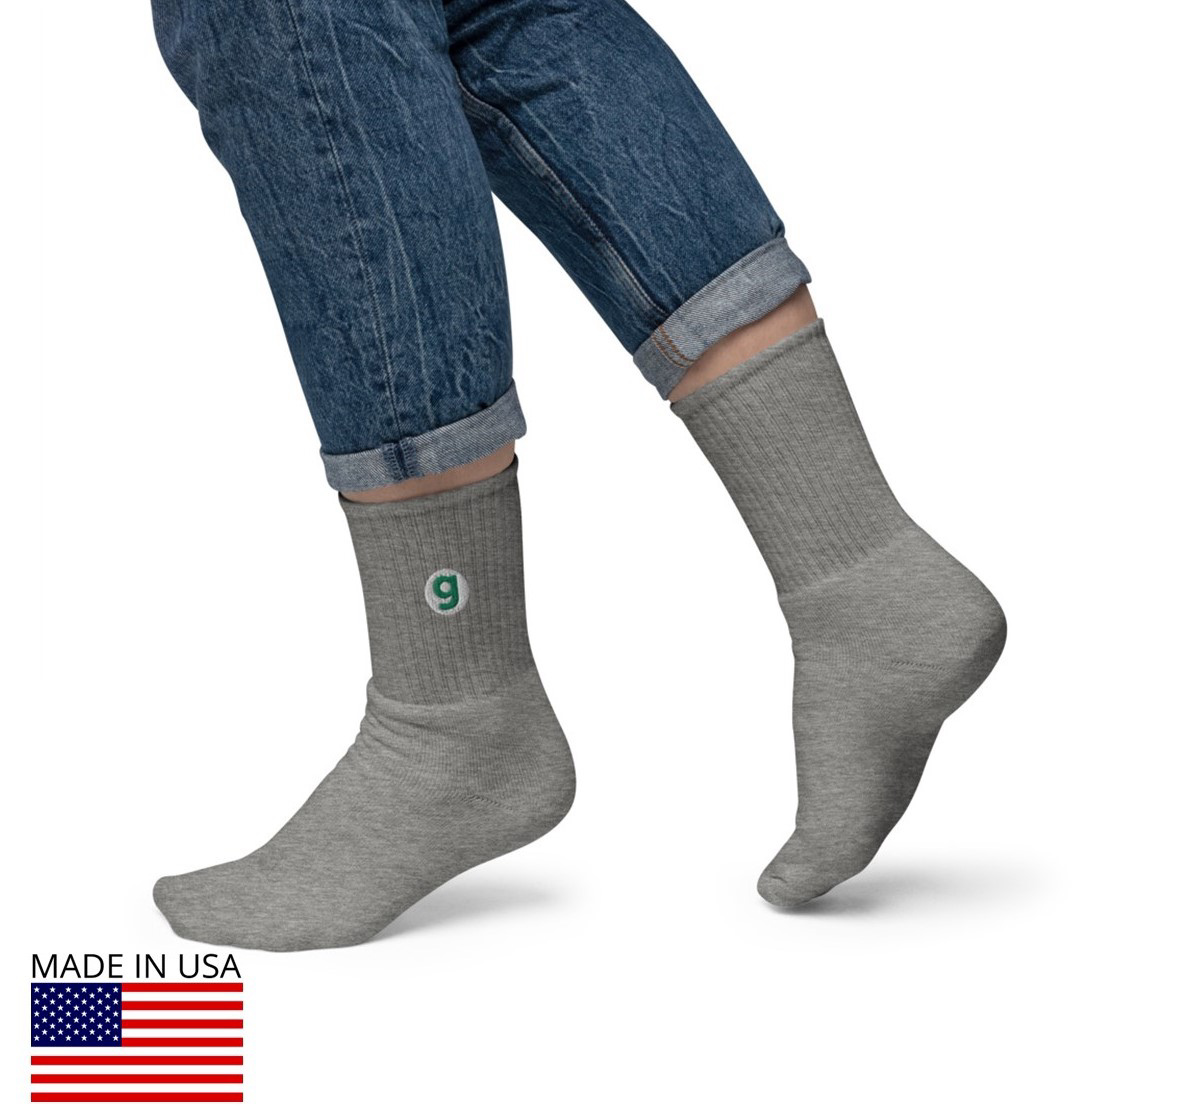 Green G Embroidered Socks - Heather Grey / L/XL